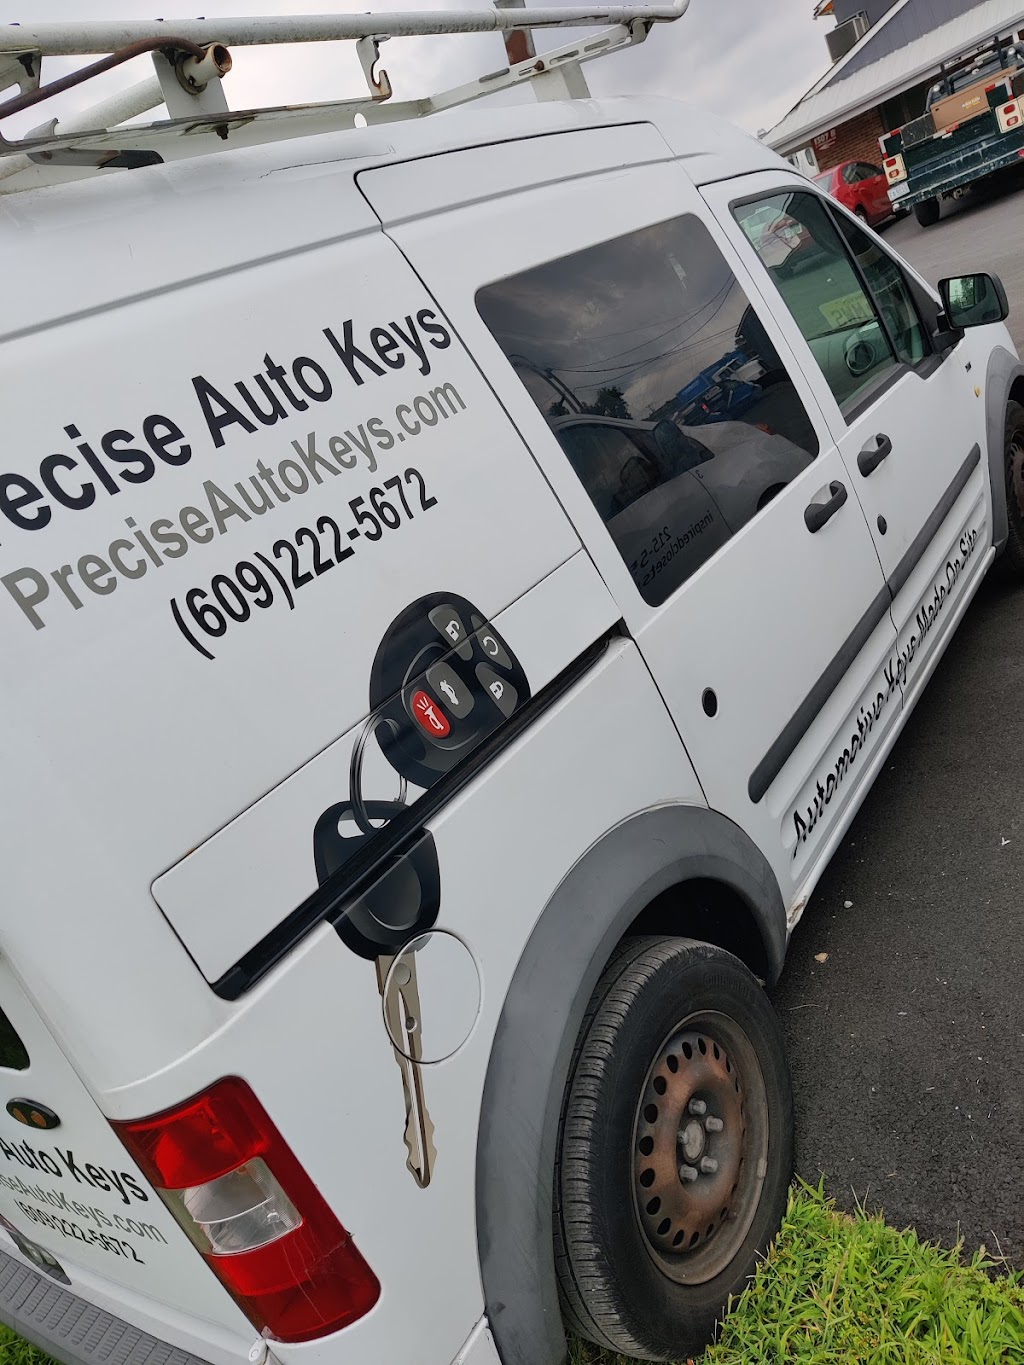 Precise Auto Keys LLC | 333 N Oxford Valley Rd #502, Fairless Hills, PA 19030 | Phone: (609) 222-5672